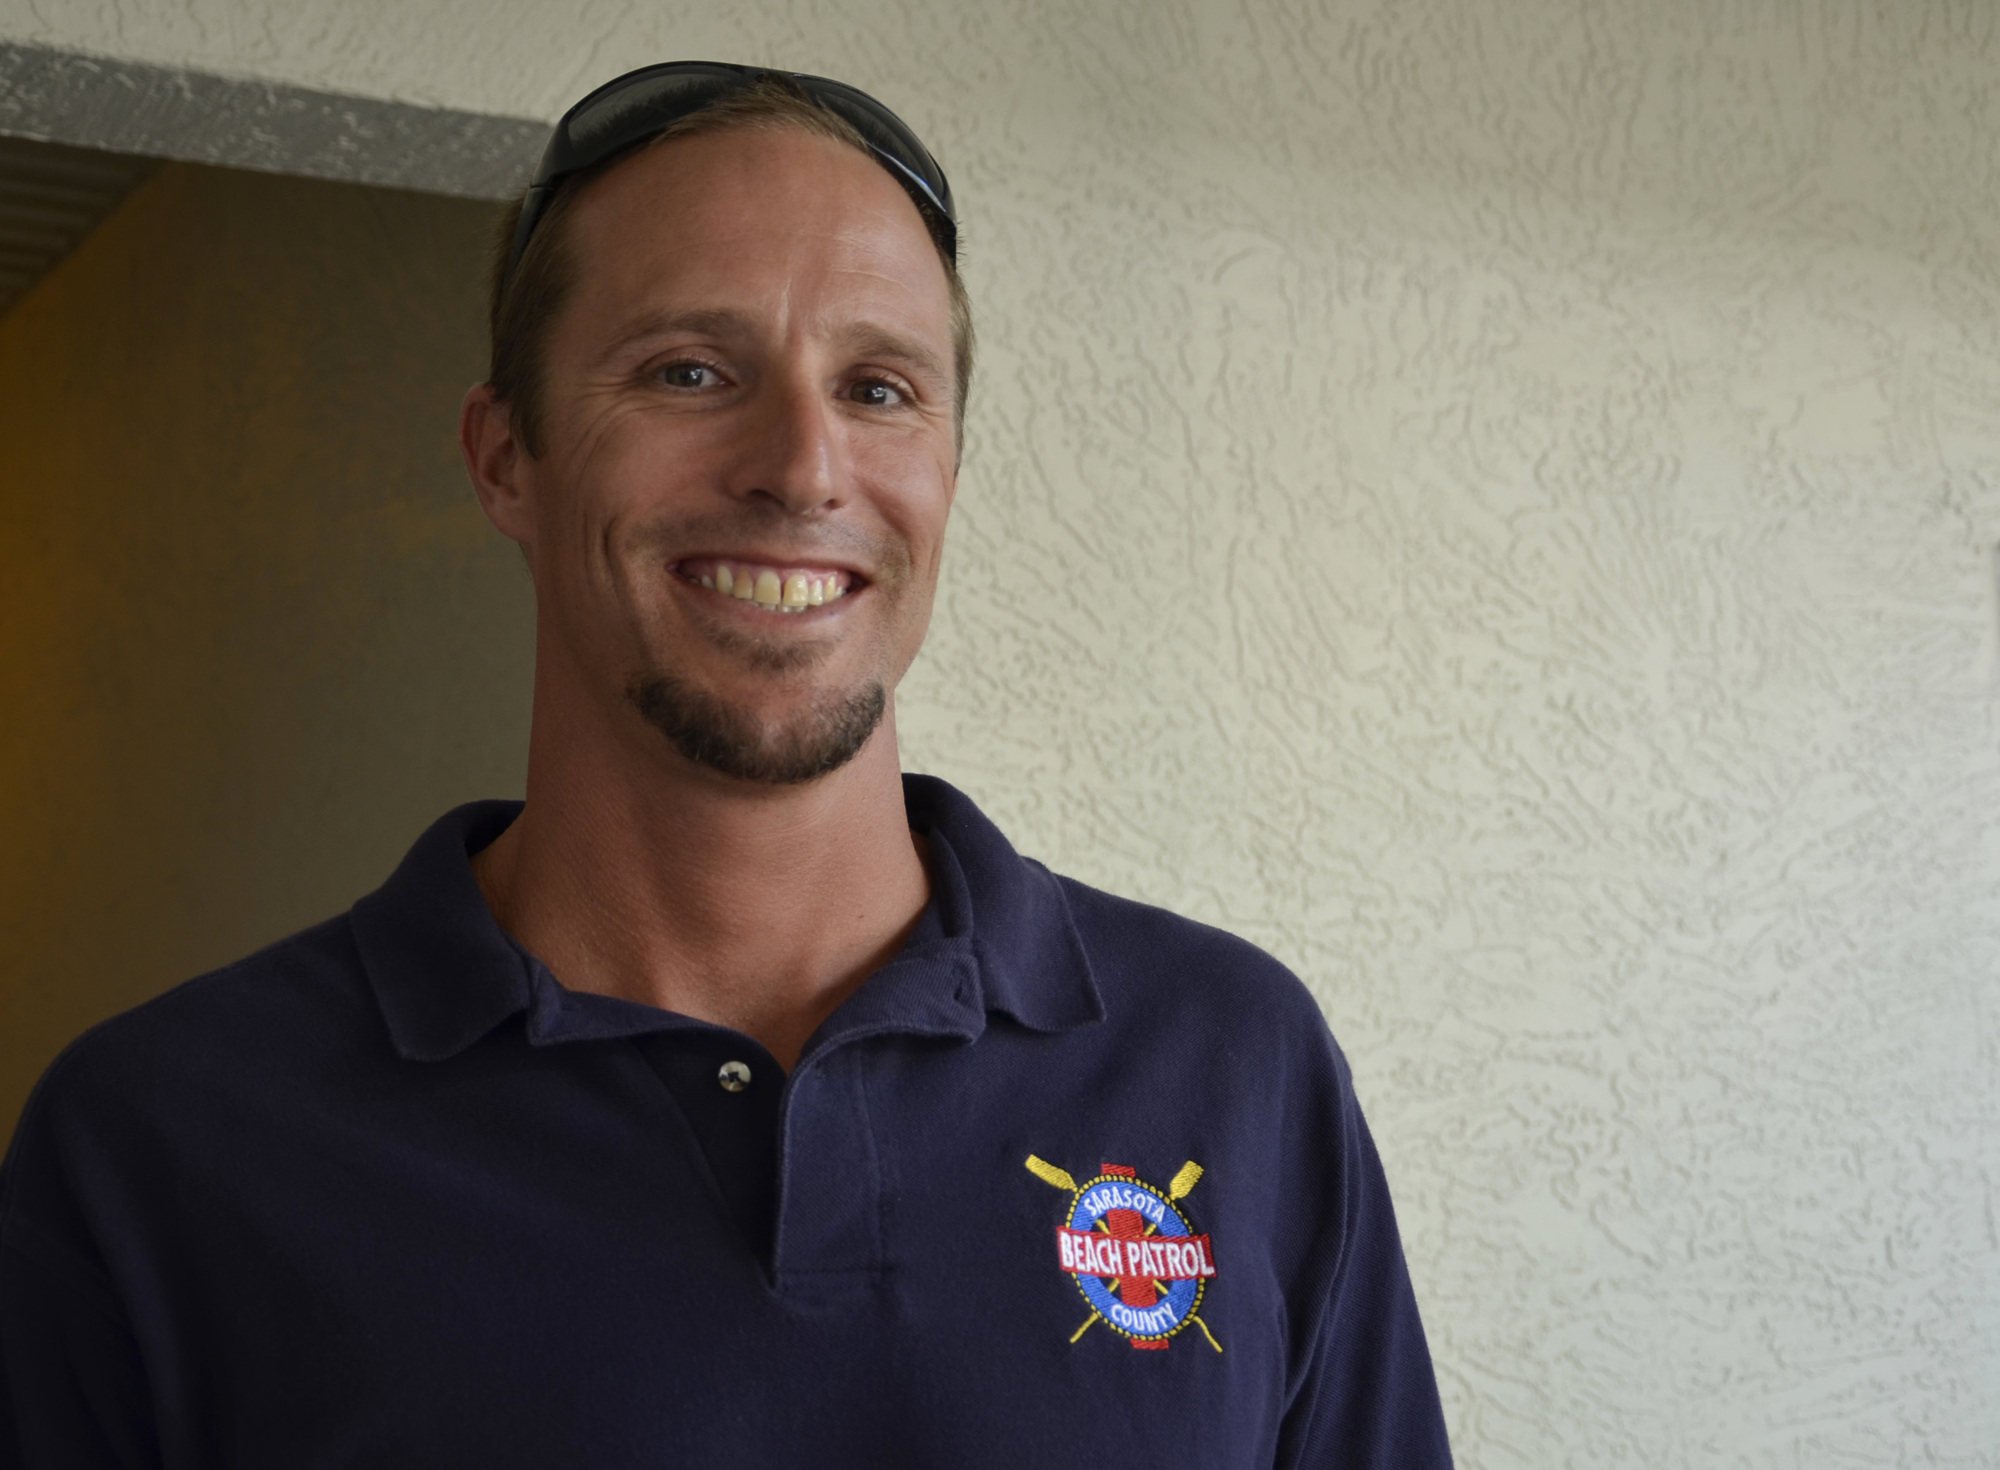 Richard Hinkson has worked with Sarasota County Beach Patrol for 16 years.